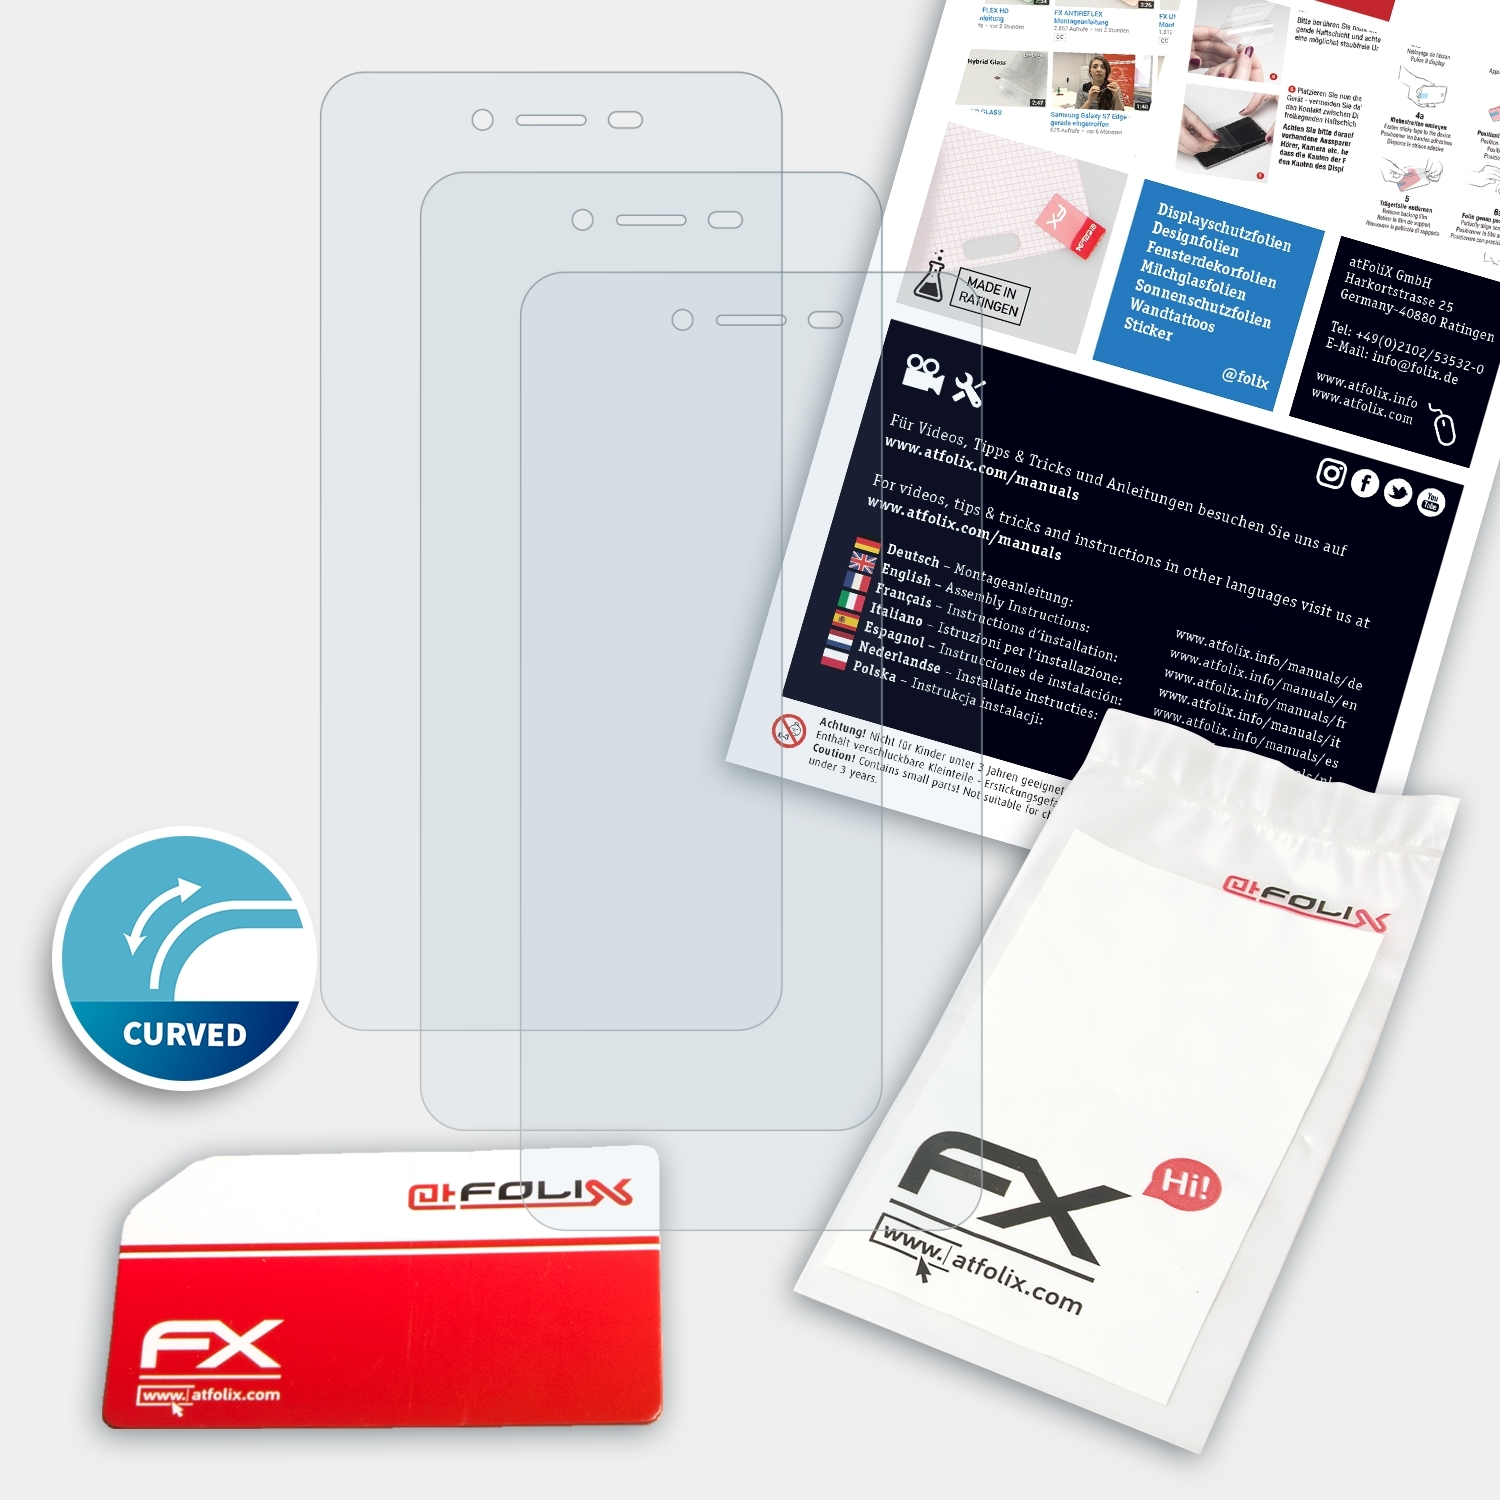 ATFOLIX 3x FX-ActiFleX Wiko Displayschutz(für Max) Jerry